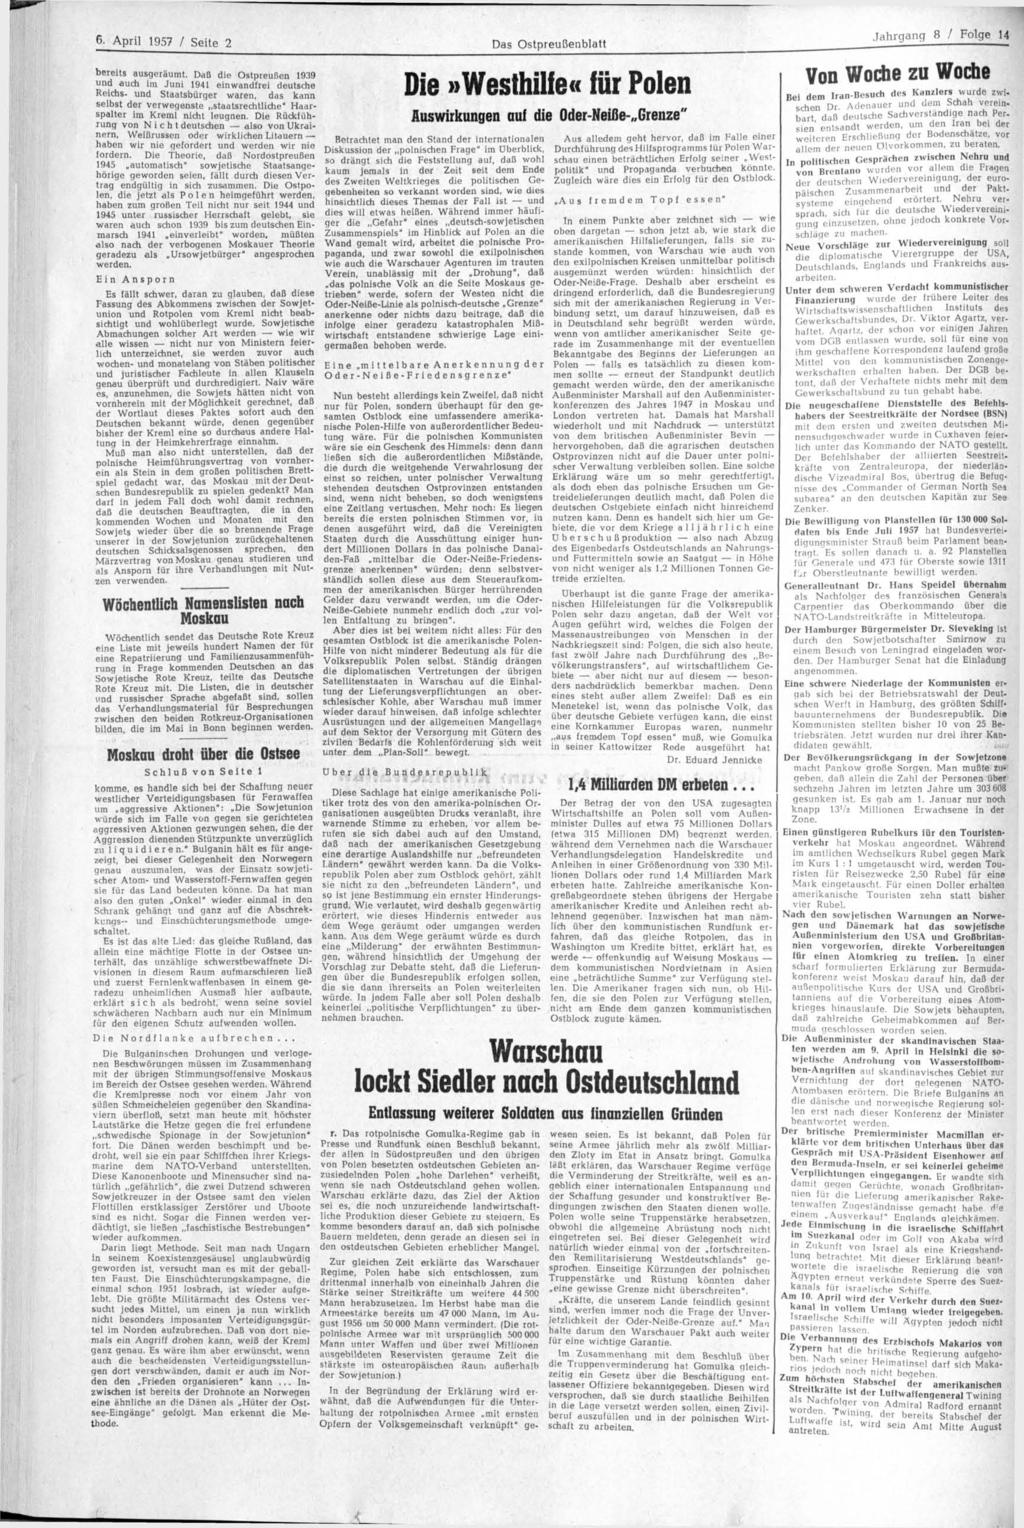 6. April 1957 / Seite 2 Das Ostpreußenblatt Jahrgang 8 / Folge 14 bereits ausgeräumt.